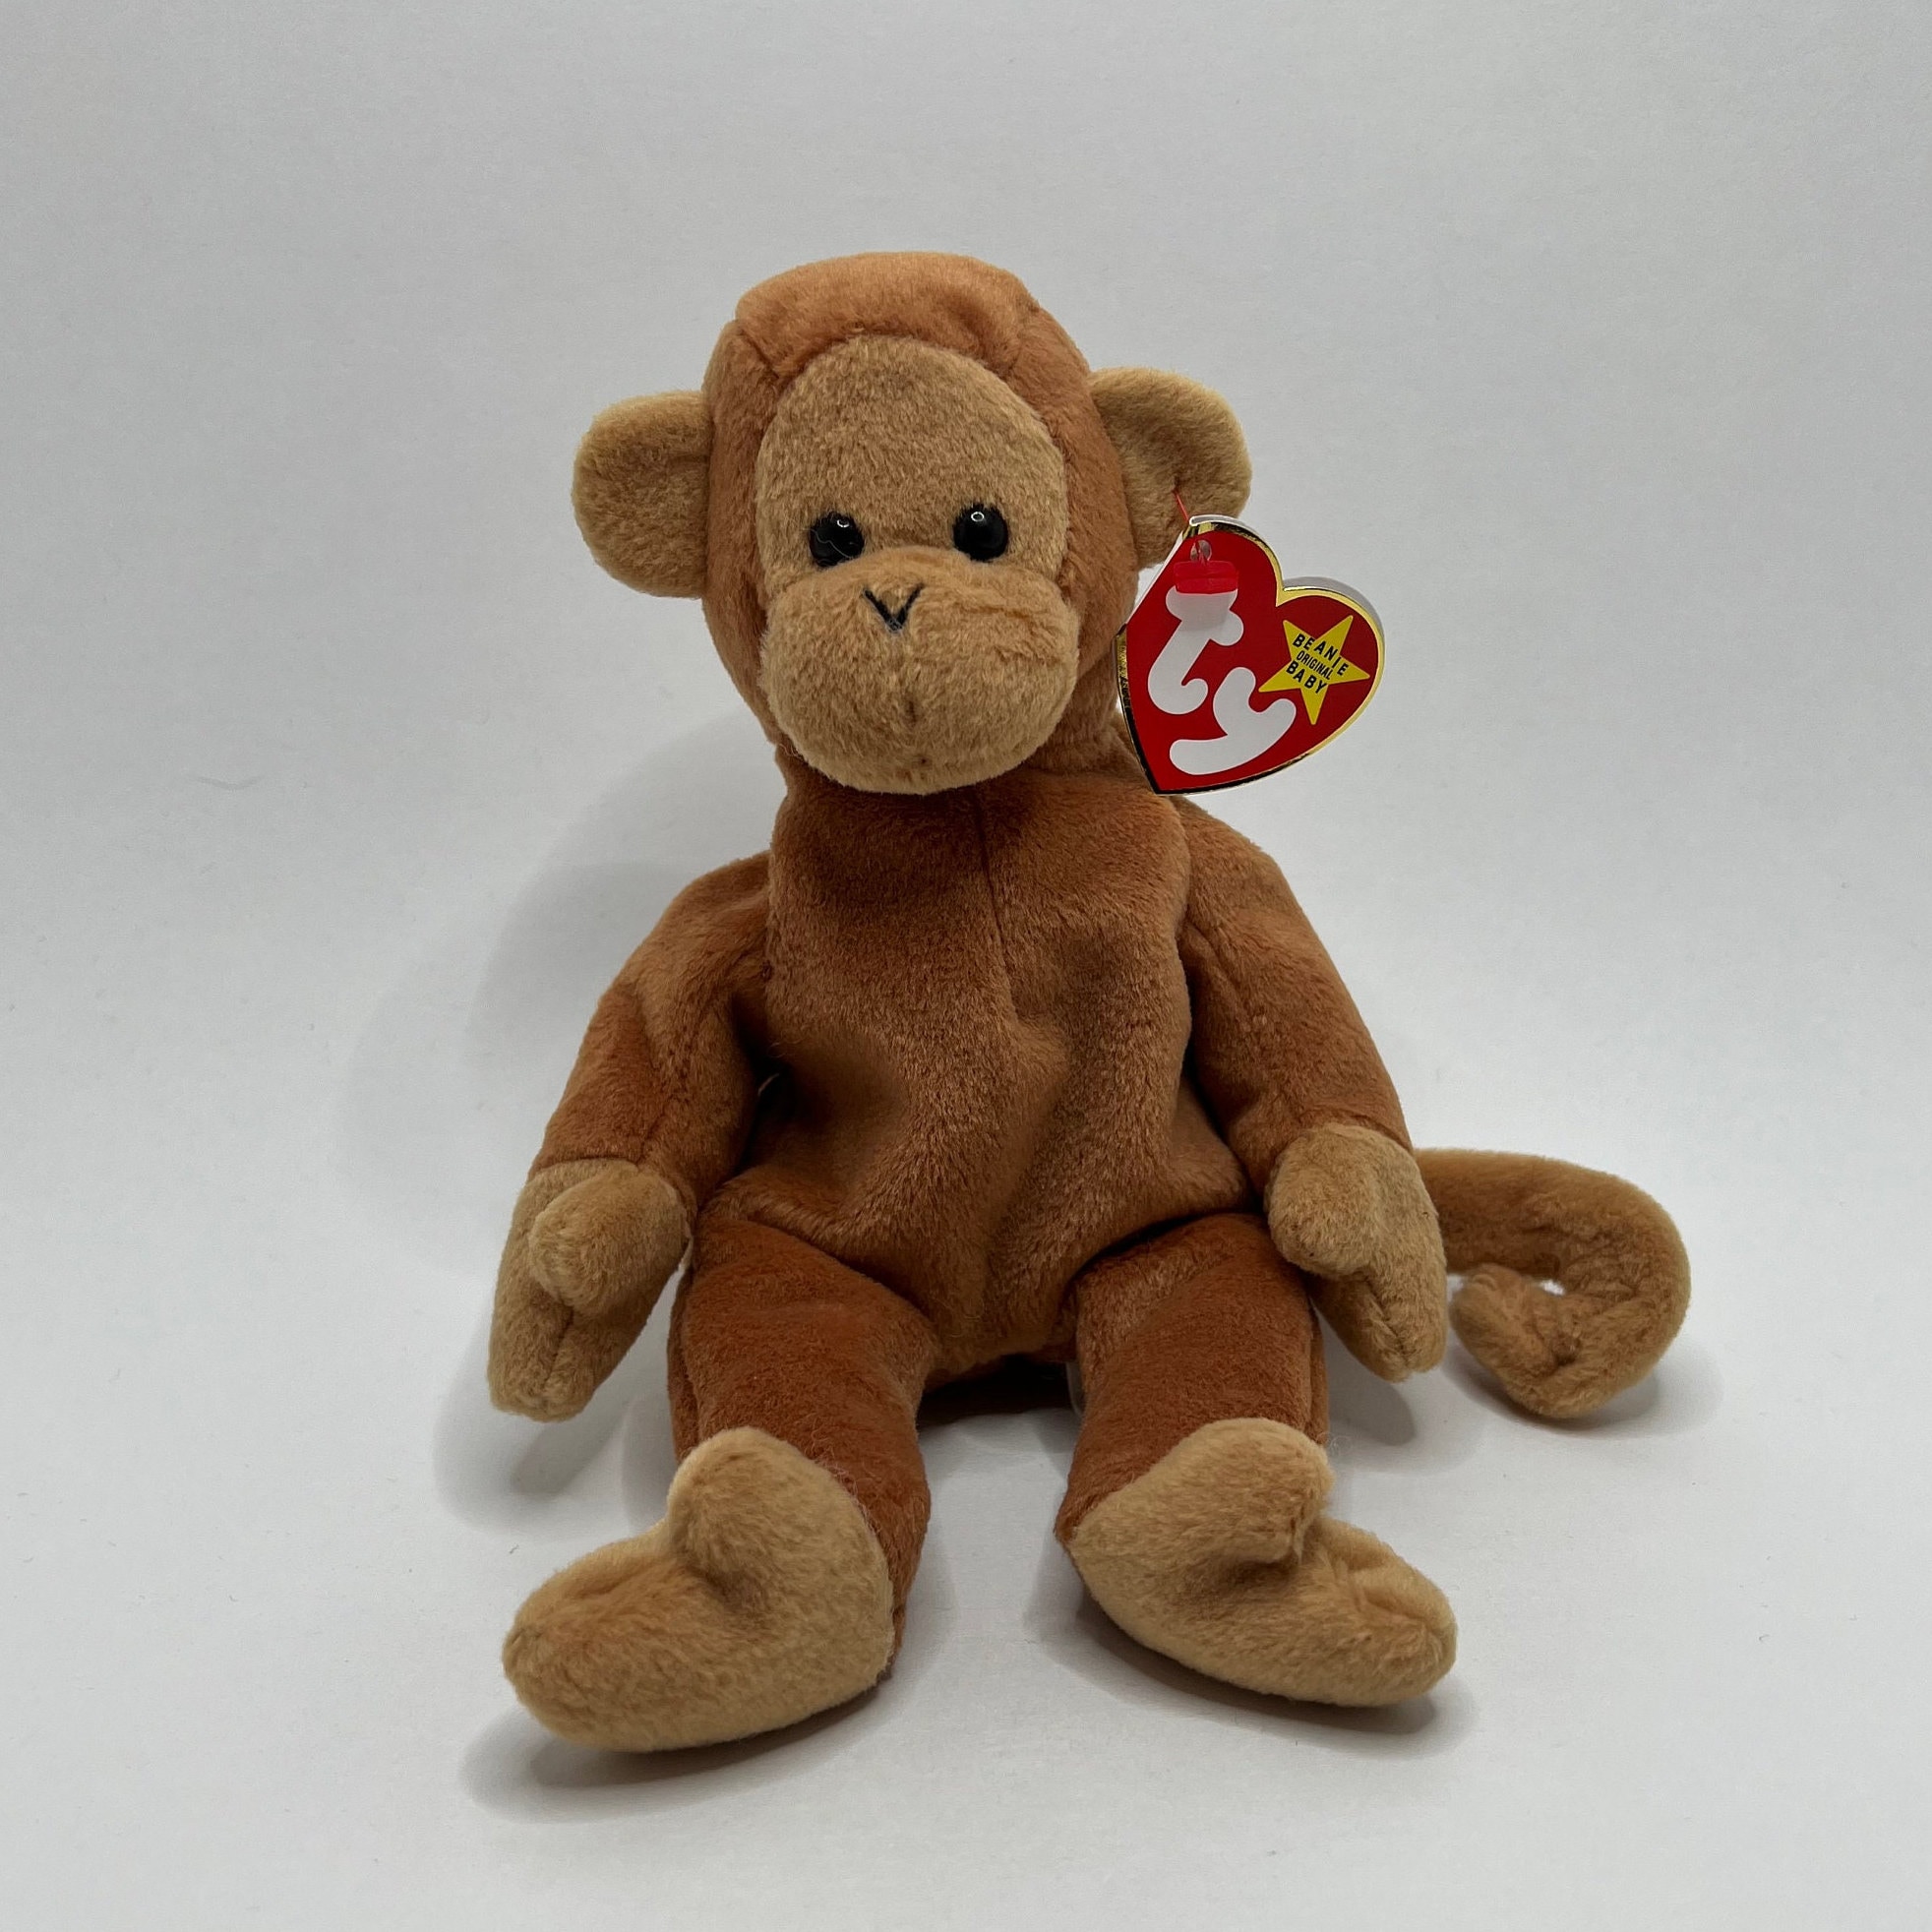 Rare Beanie Babies Monkey Bongo the Monkey Vintage Toys From